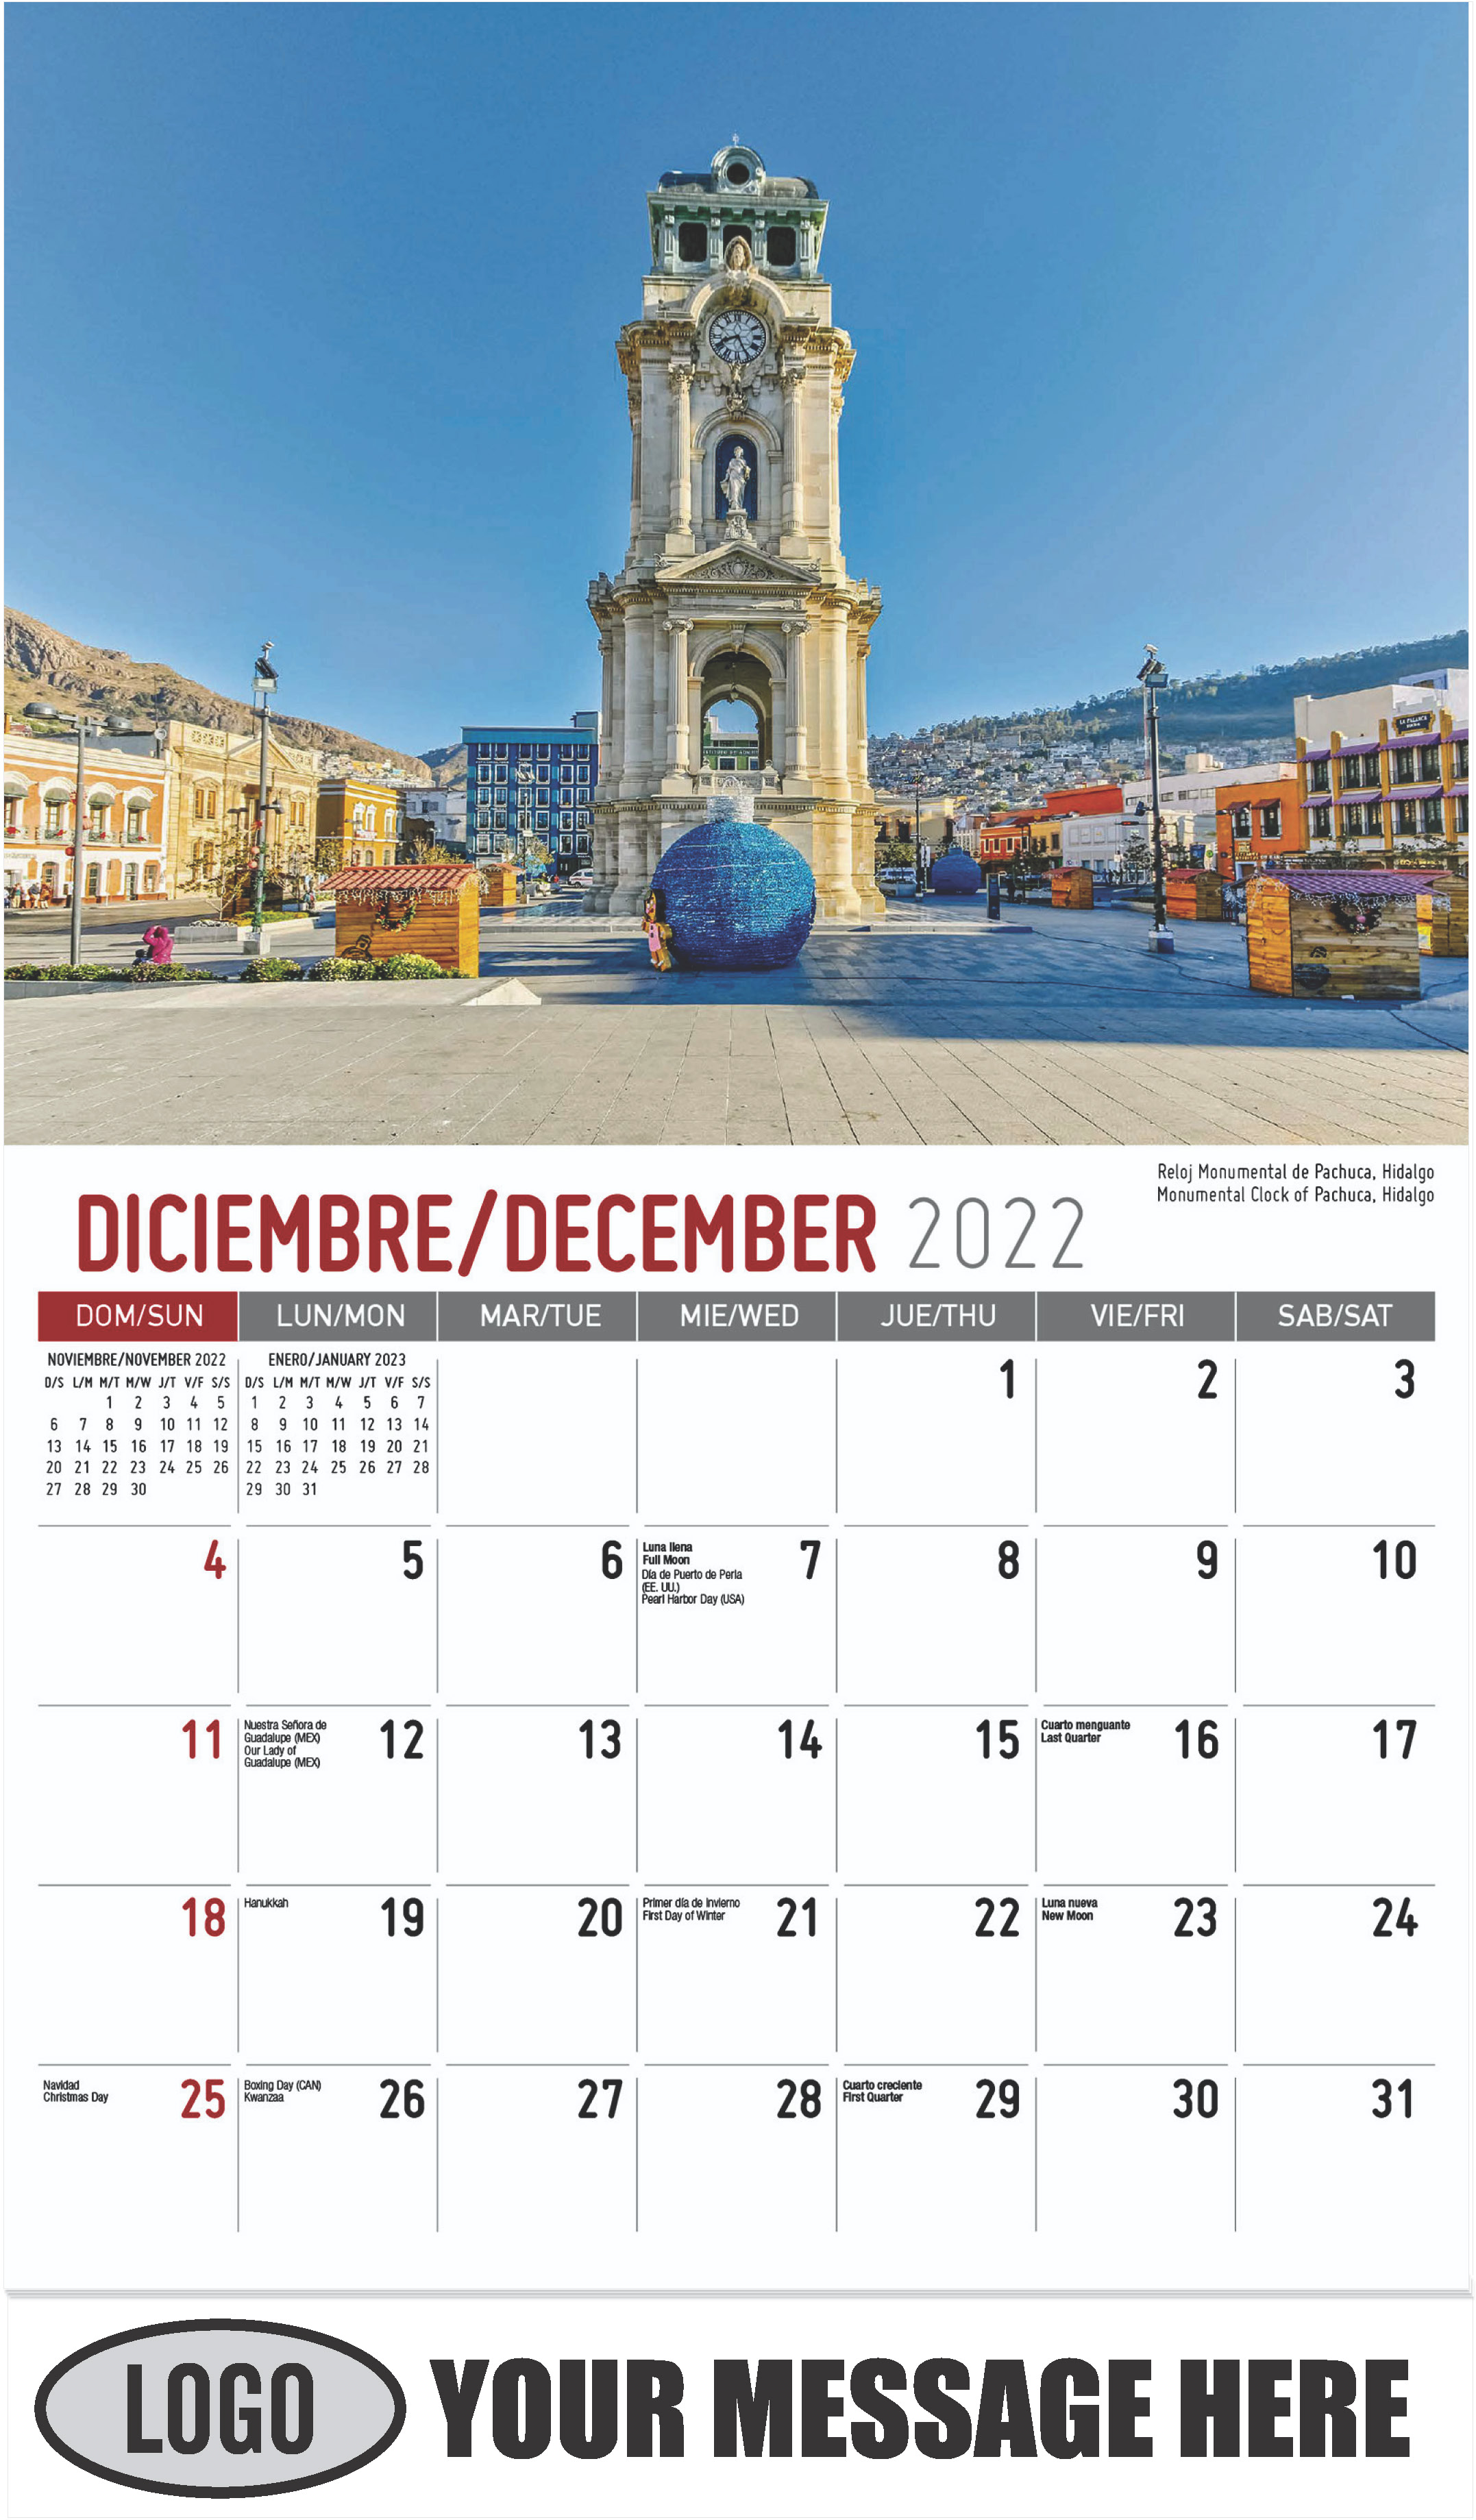 Monumental Clock of Pachuca,Hidalgo - December 2022 - Scenes of Mexico (Spanish-English bilingual) 2023 Promotional Calendar